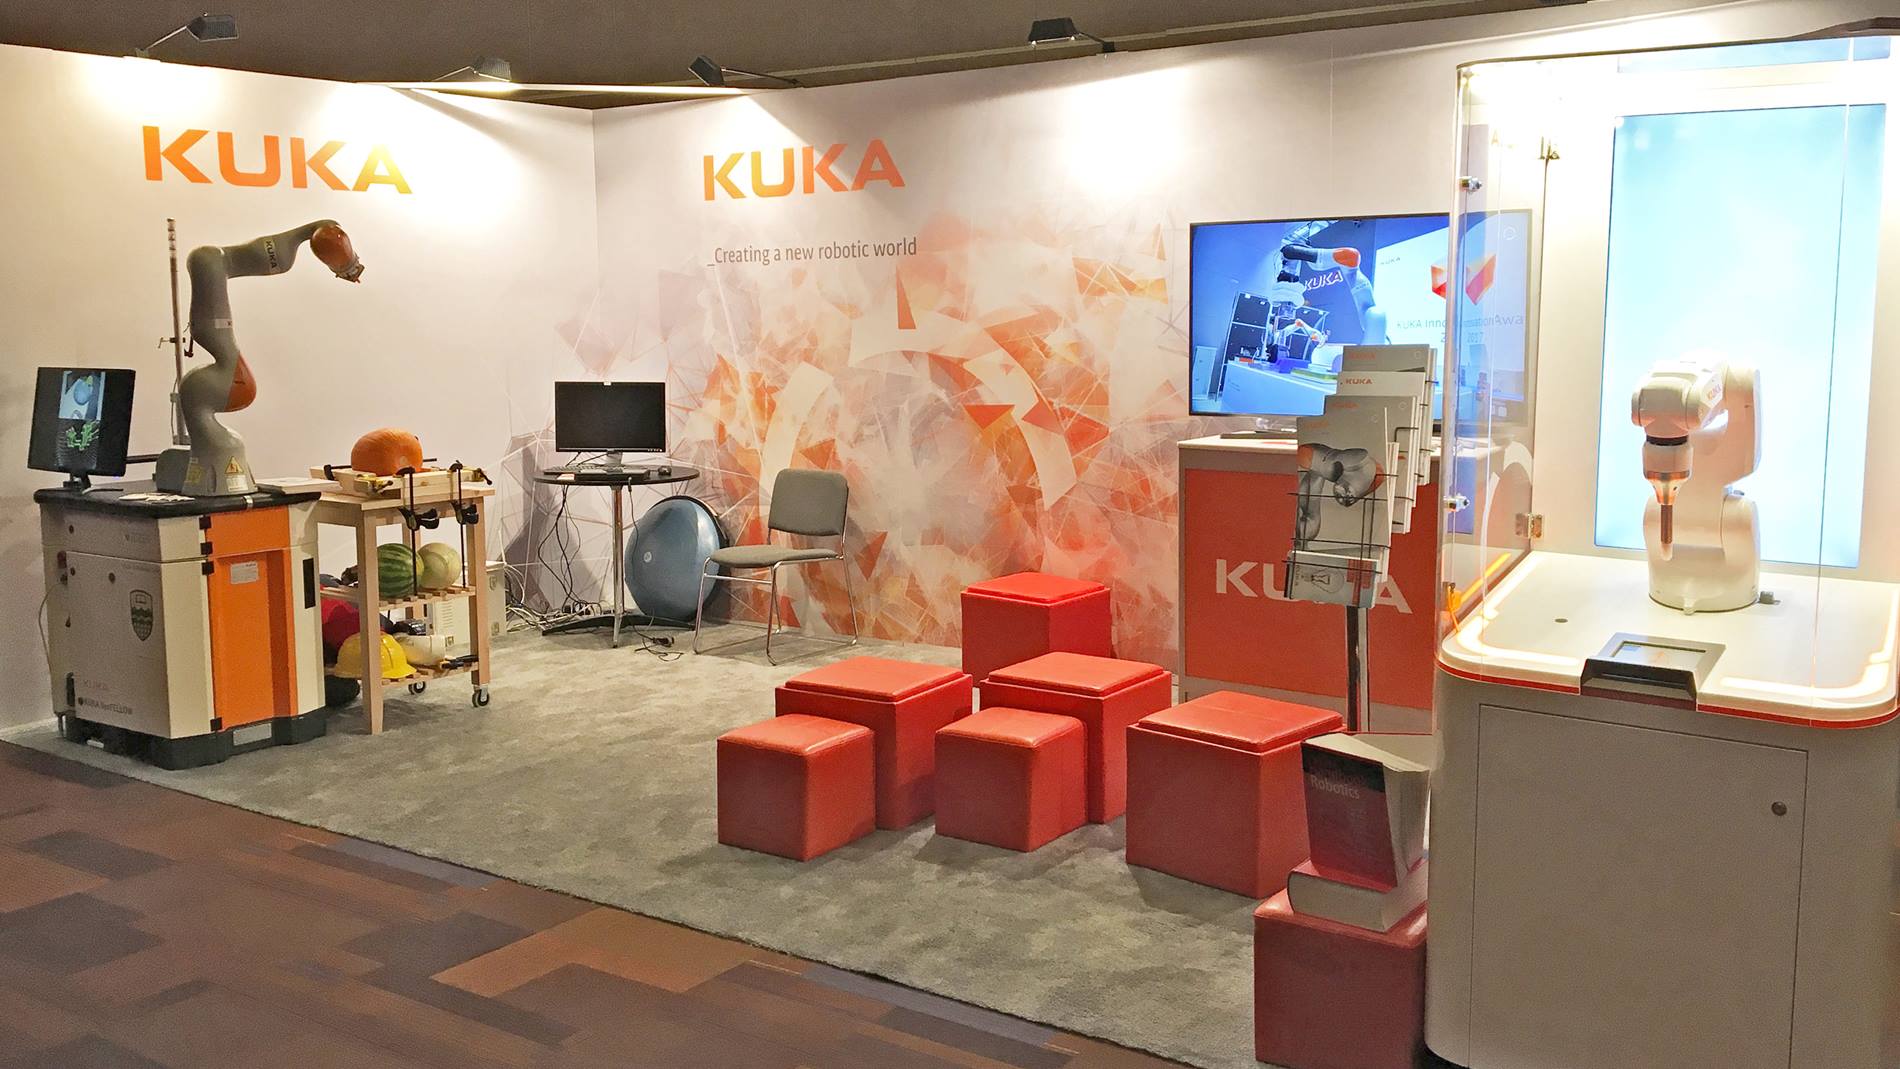 The KUKA booth at IROS 2017